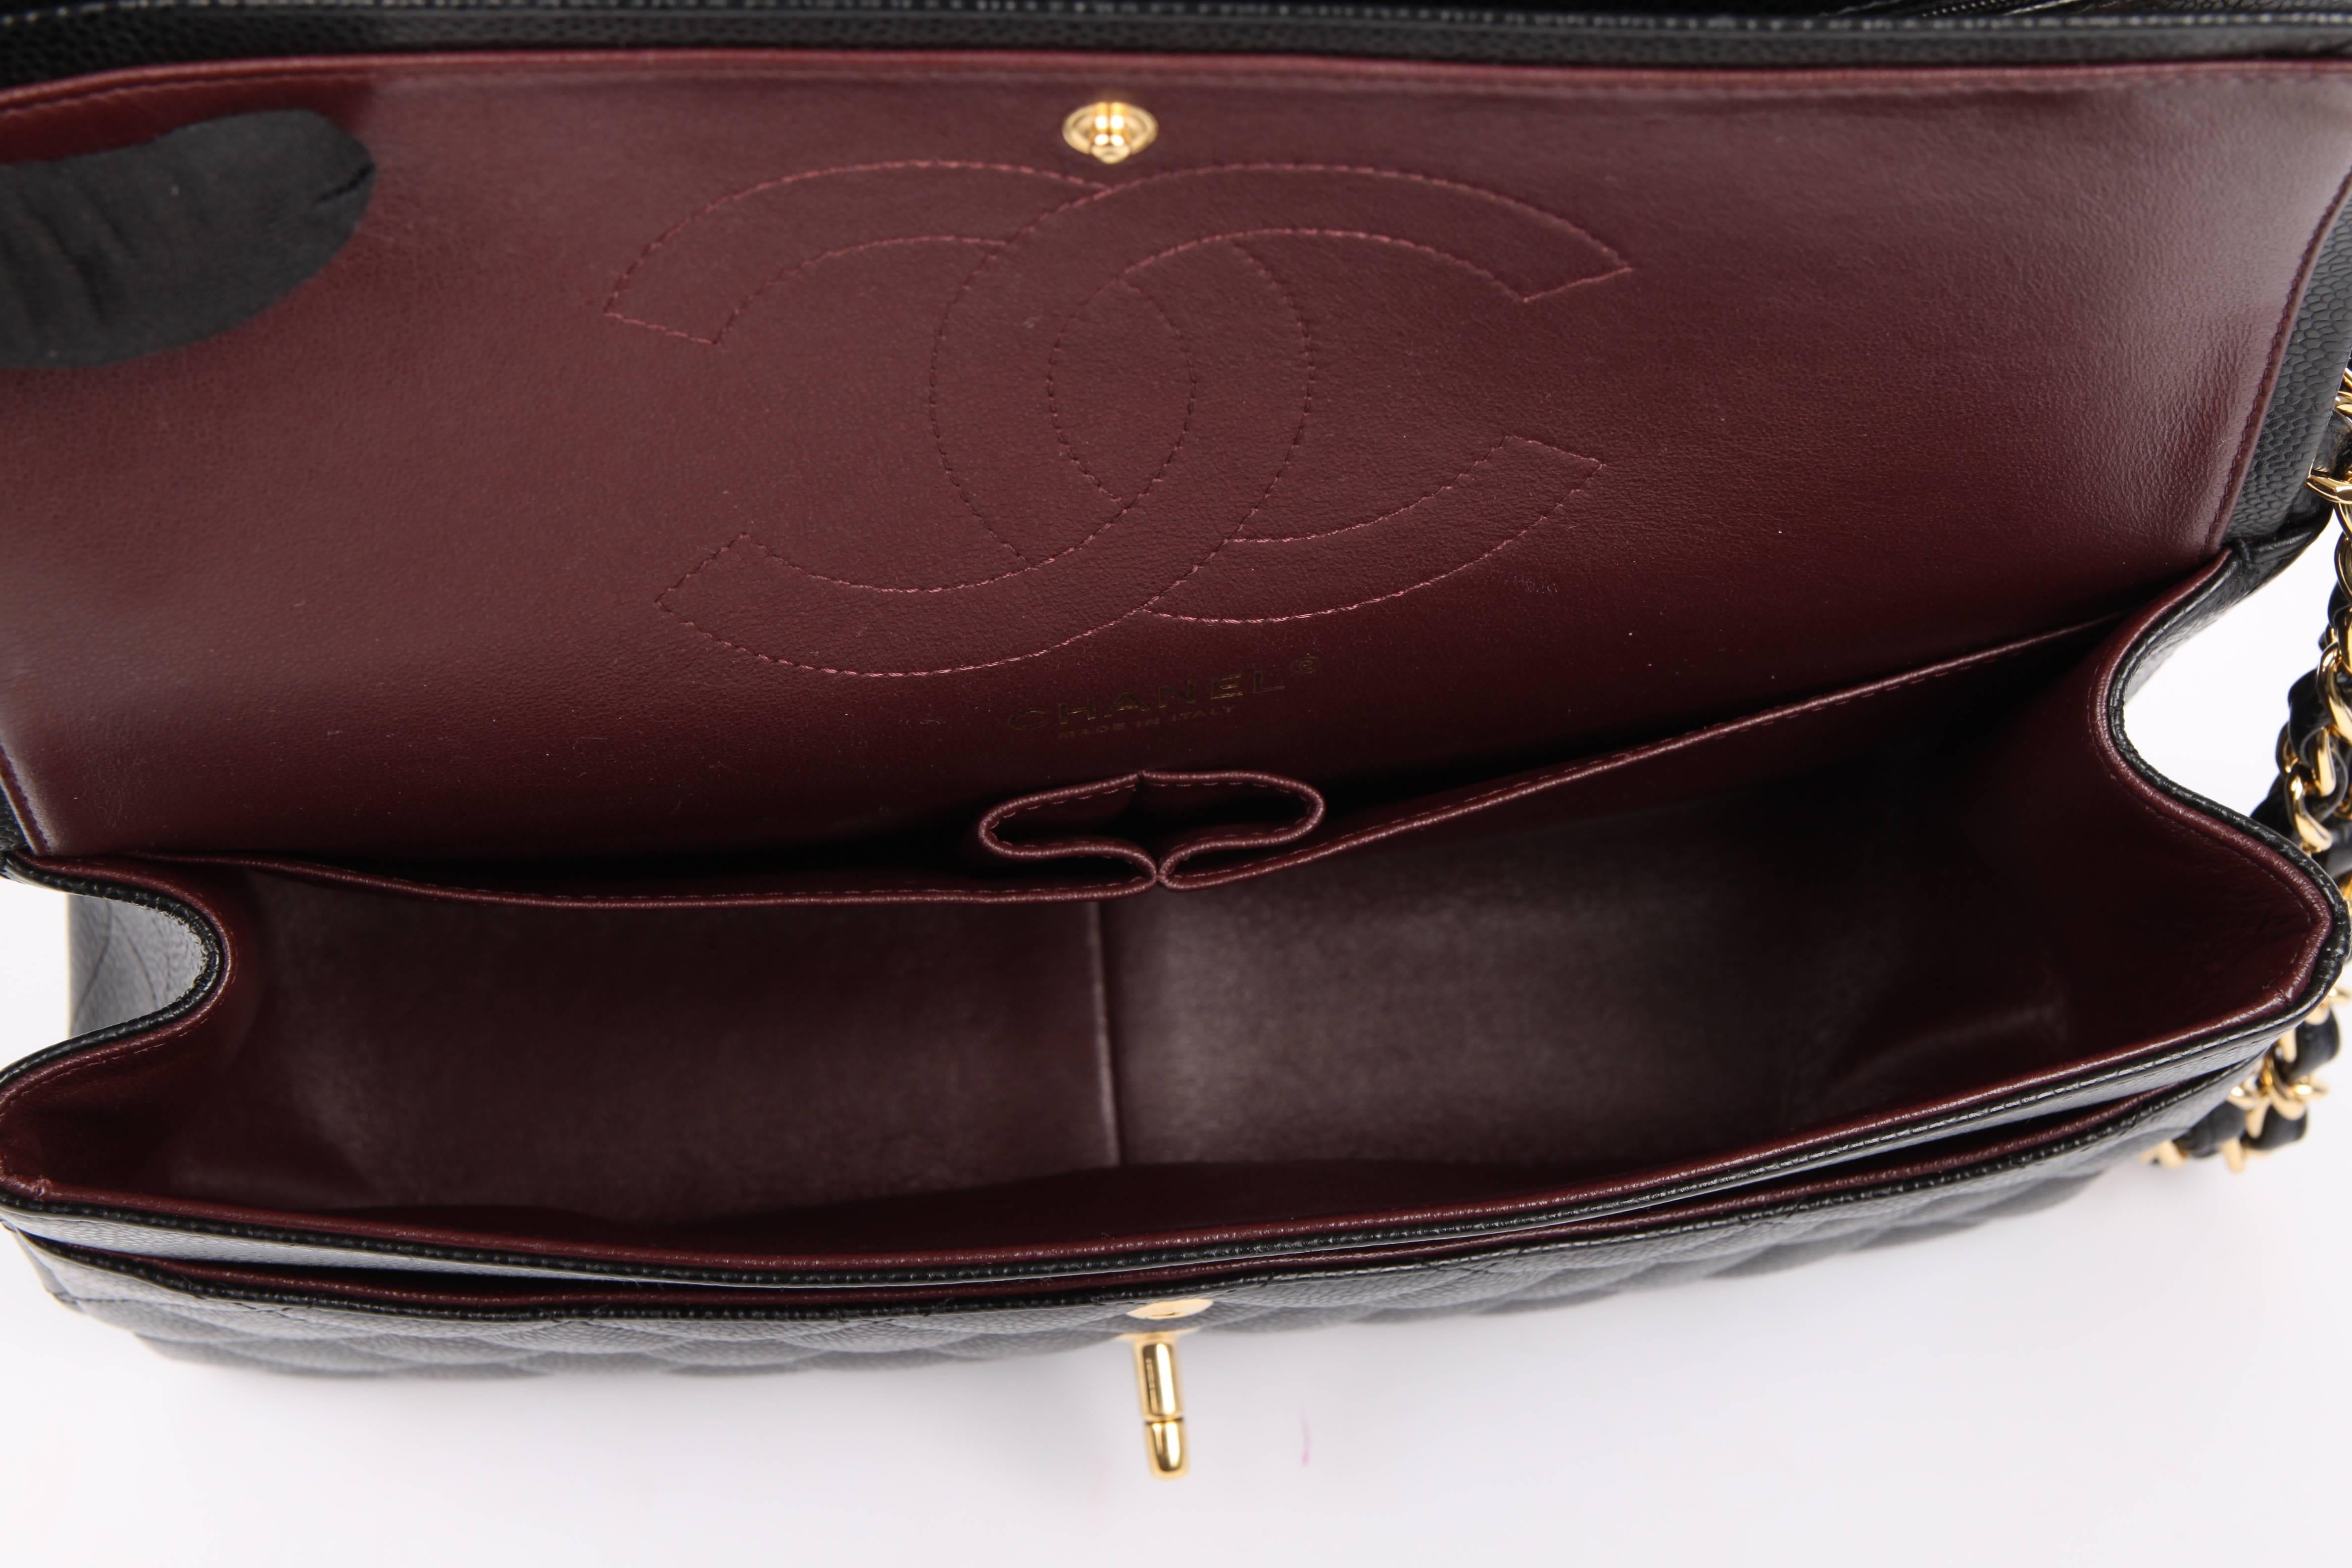       Chanel 2.55 Timeless Jumbo Double Flap Bag - black caviar leather/gold Cha 3